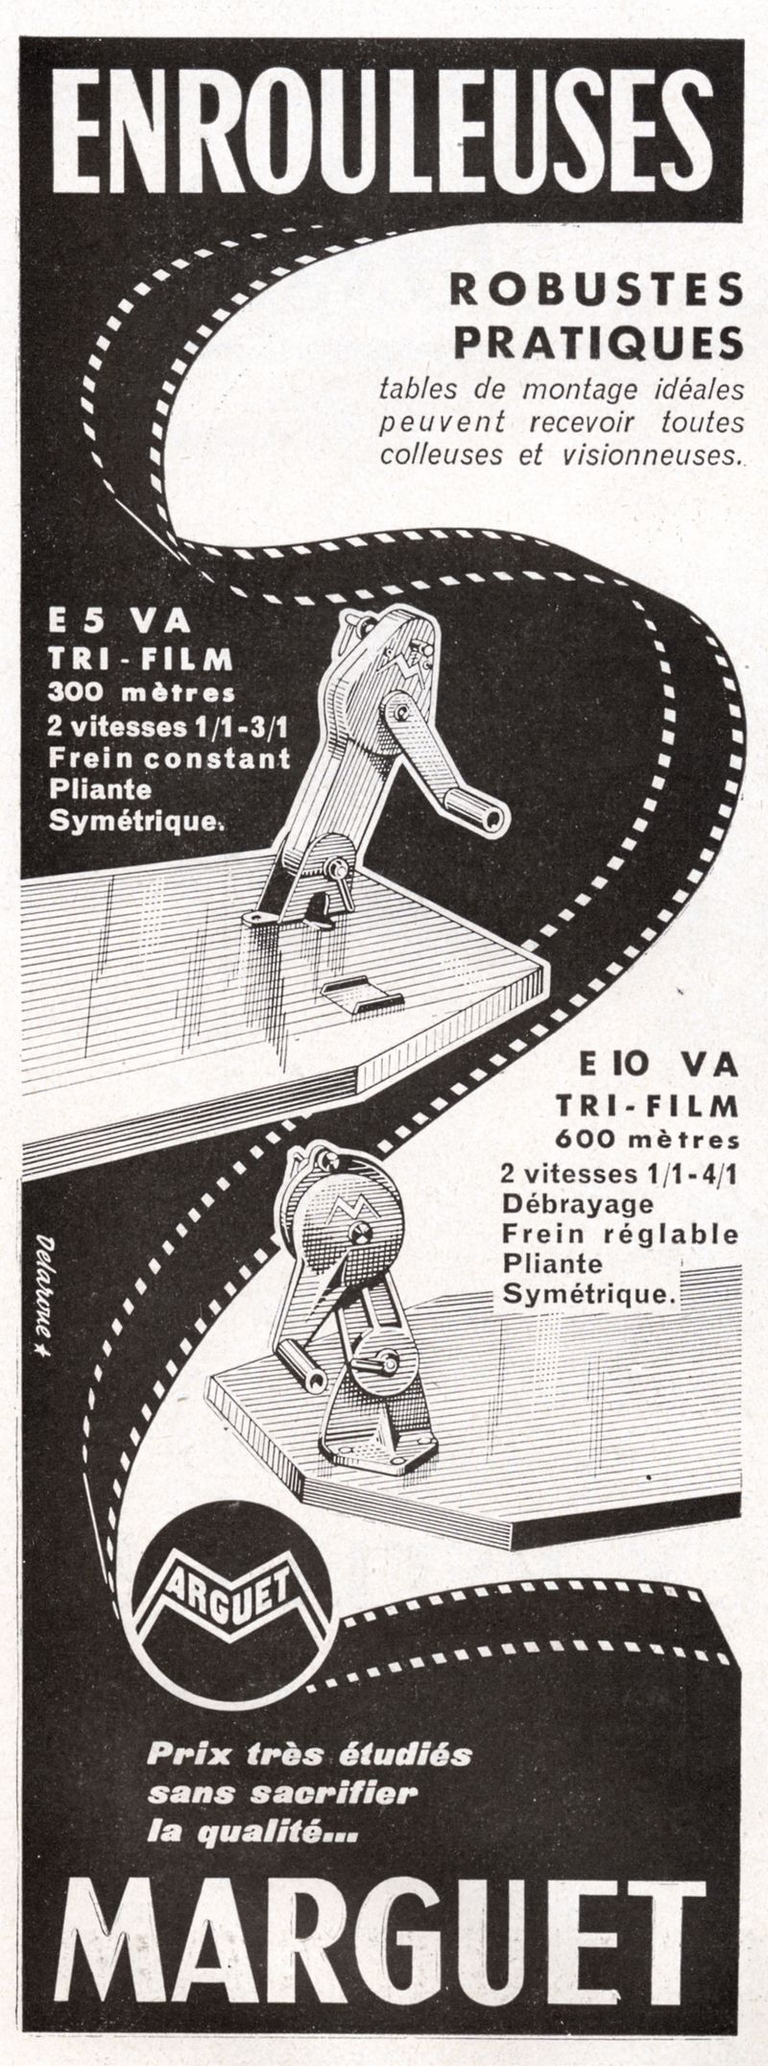 Marguet - enrouleuse E5 VA tri-film, E 10 VA tri-film - 1958